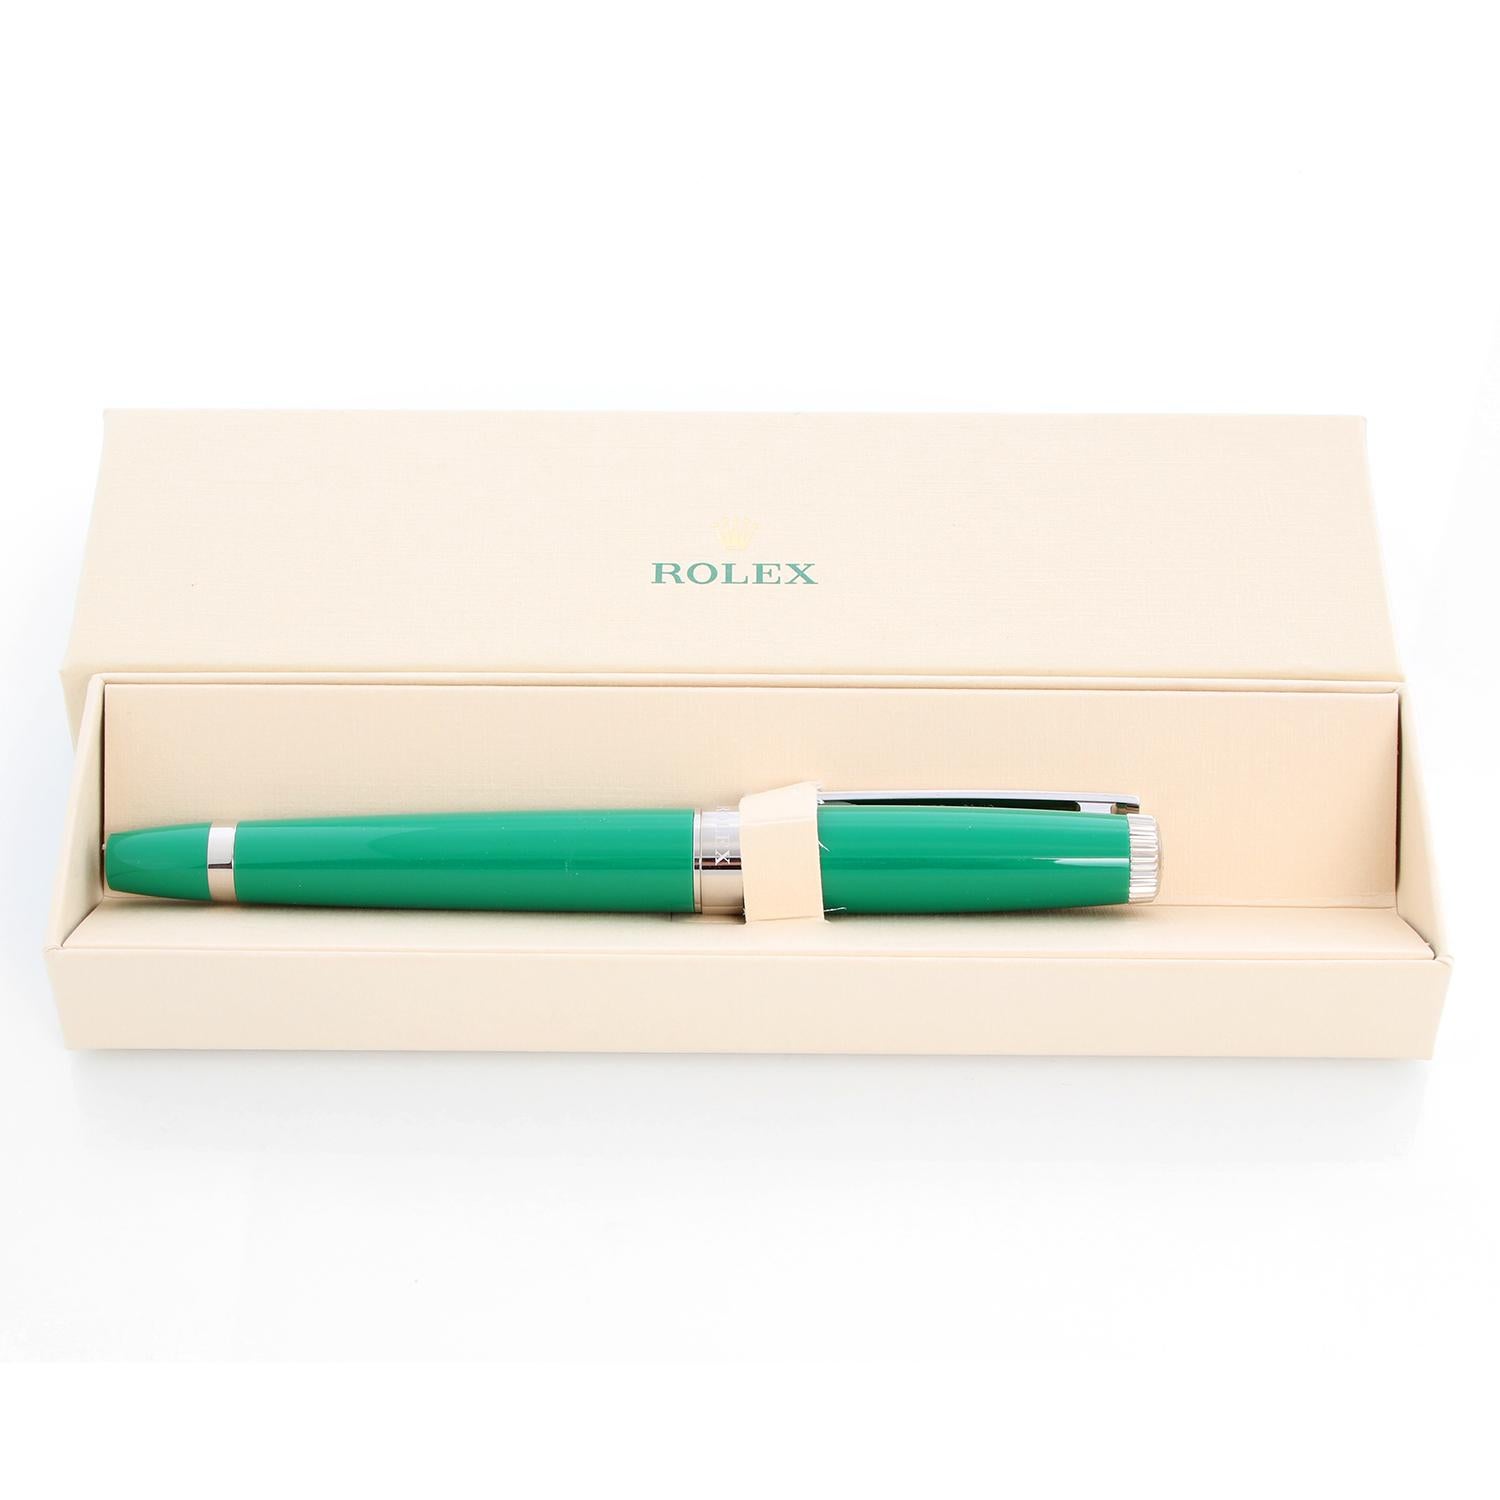 Rolex Pen - 2 For Sale on 1stDibs | rolex pen price, rolex pens, rolex  green pen